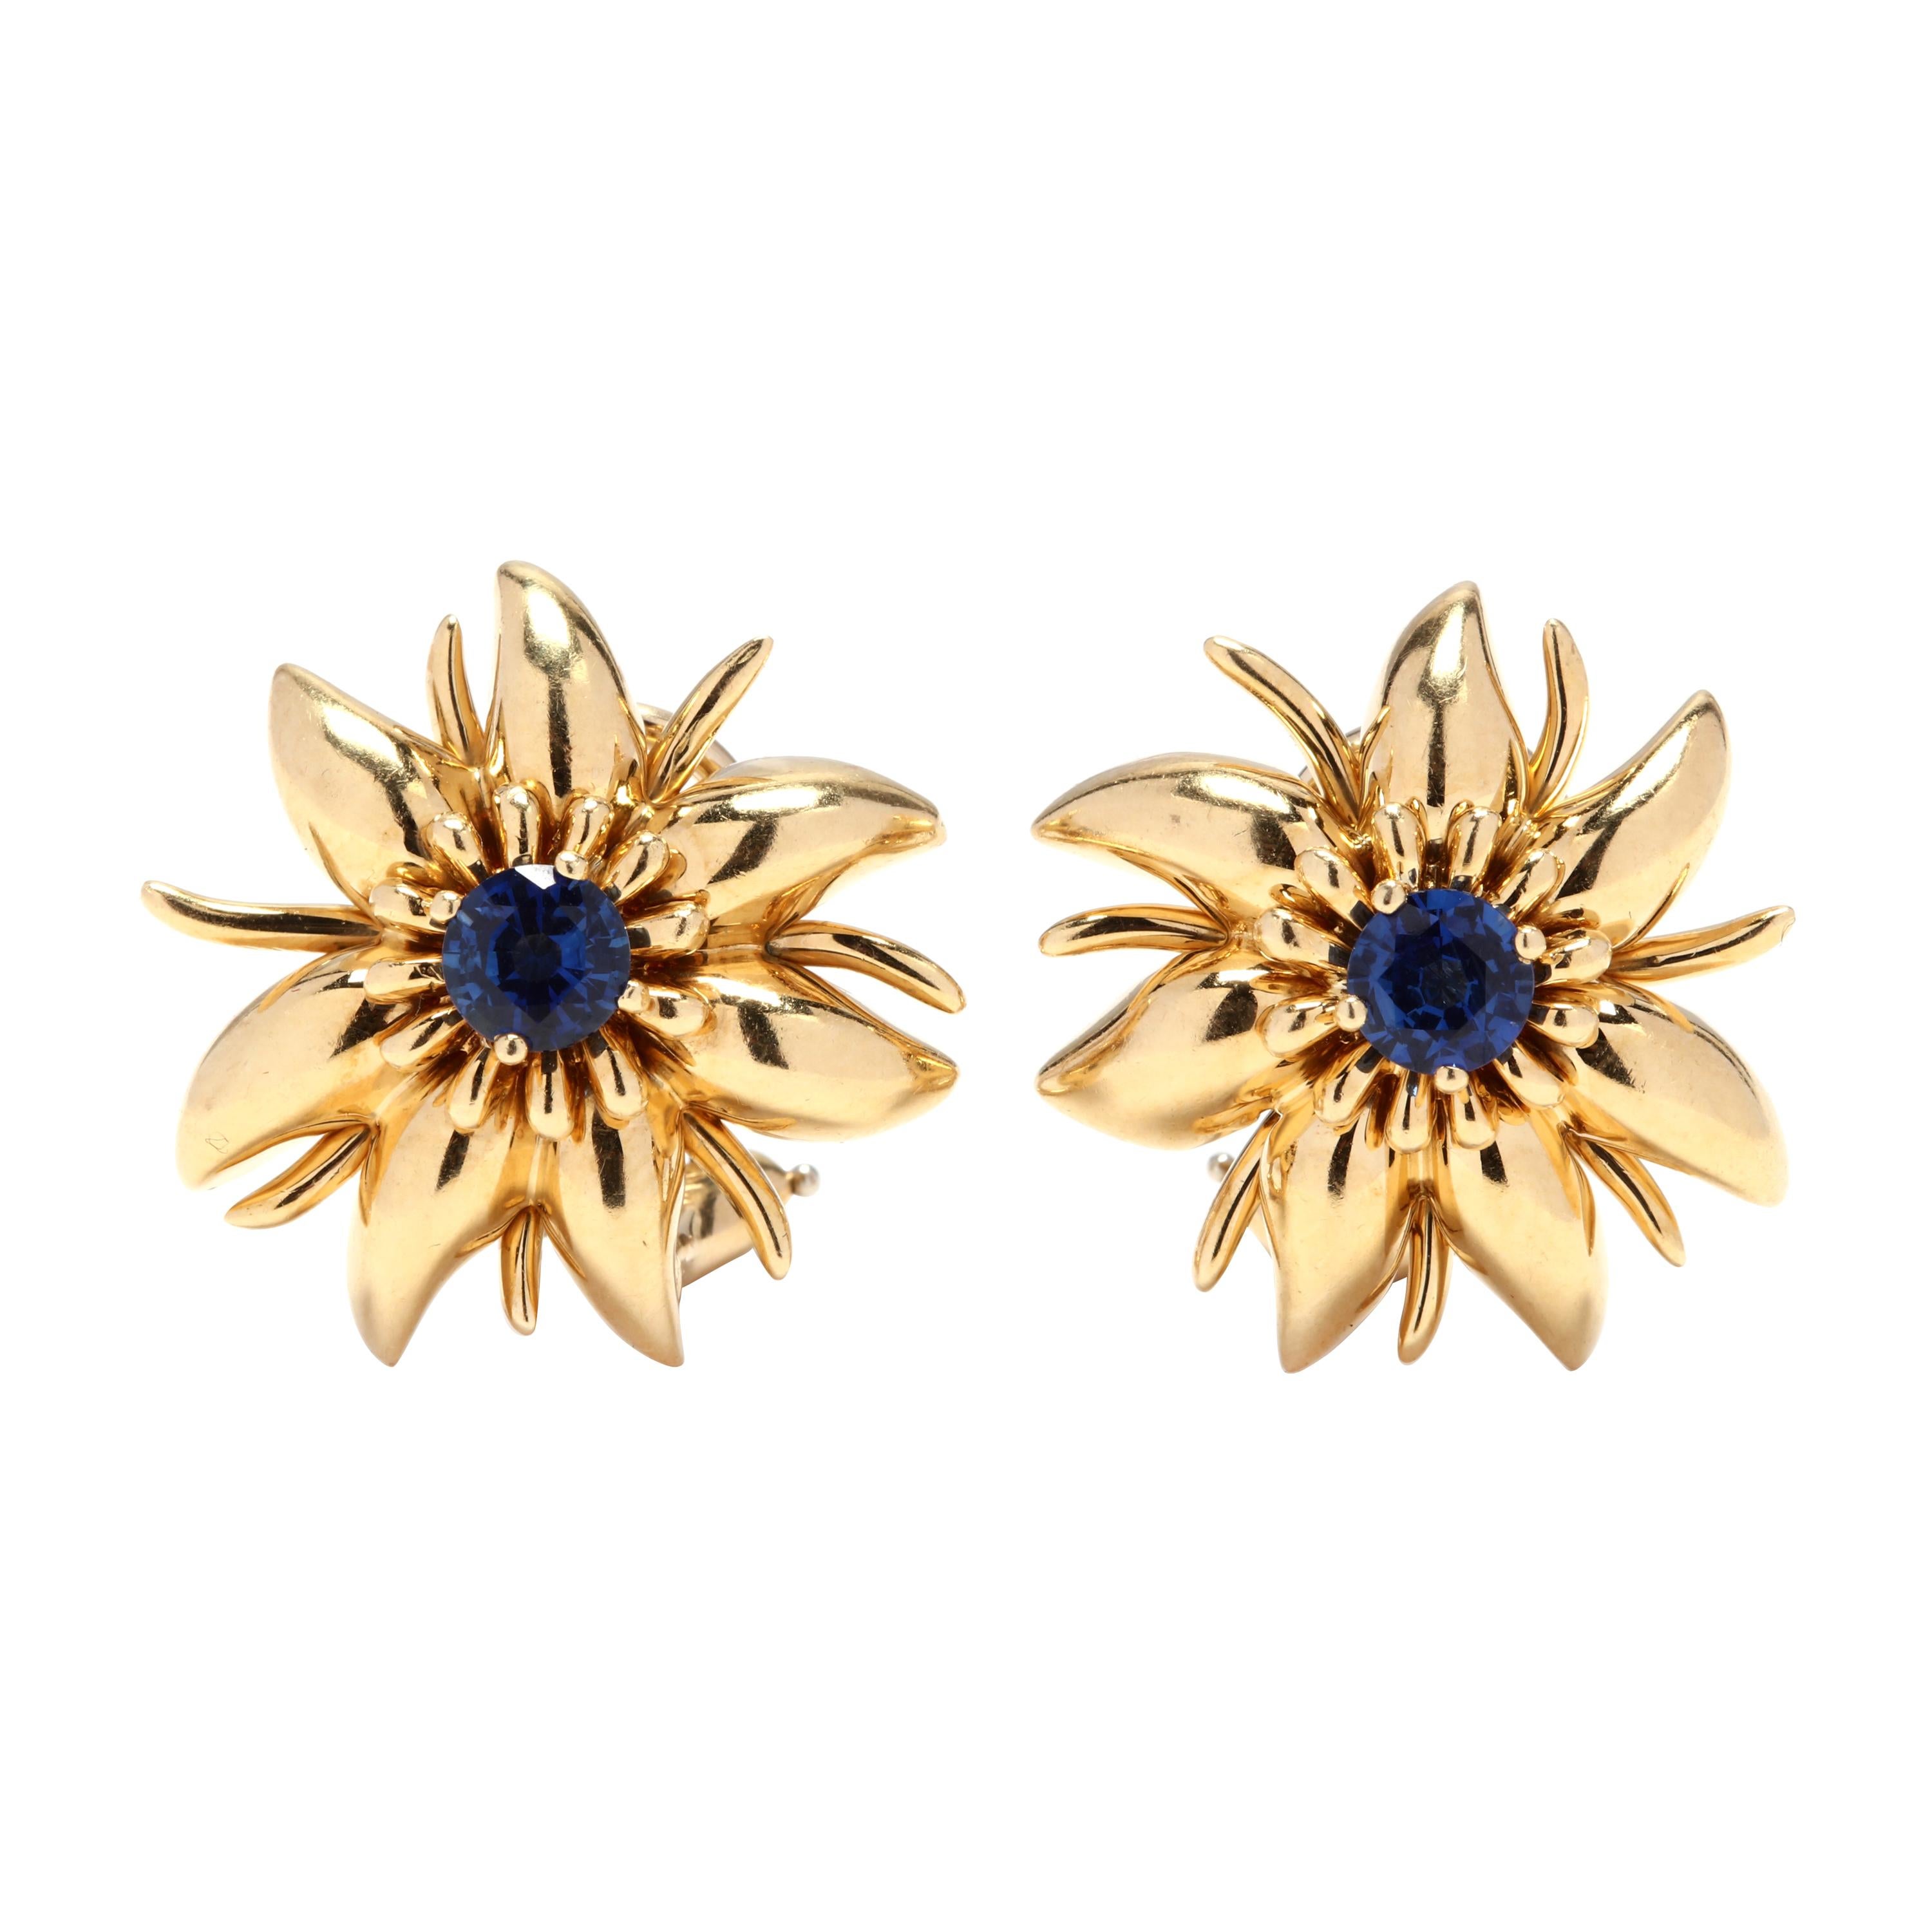 18 Karat Gold and Sapphire Flower Earrings